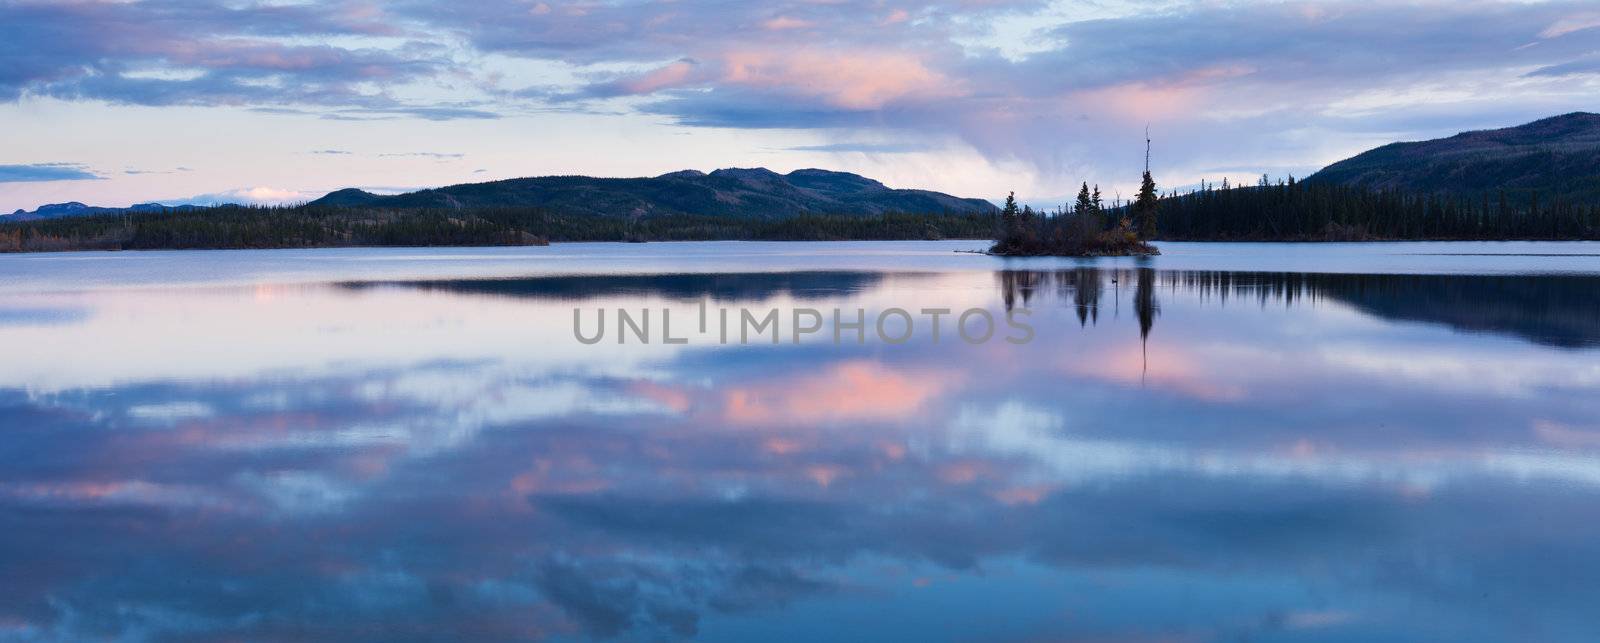 Calm lake reflecting sky at sunset, Twin Lakes, Yukon Territory, Canada.